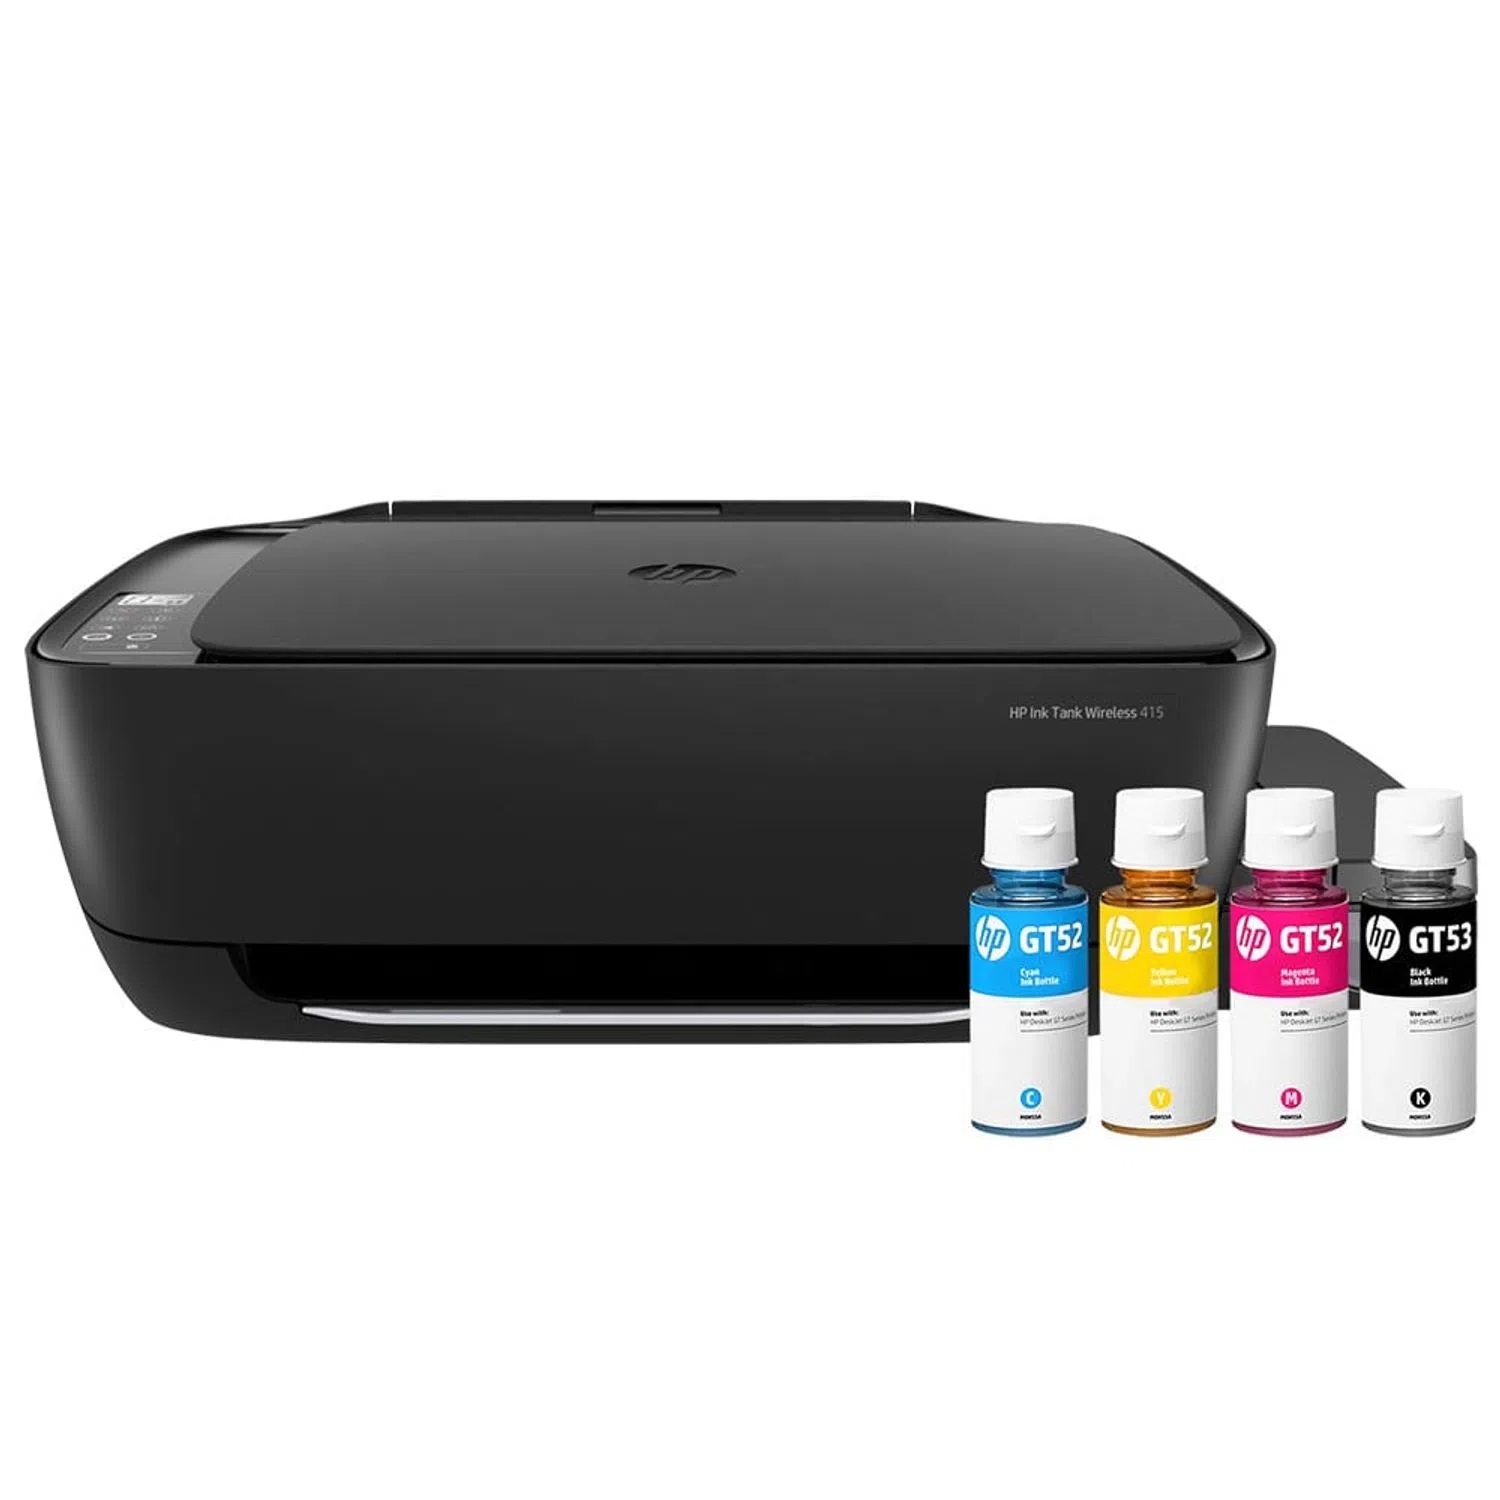 Impresora Hp Ink Tank 415 Multifuncional Wifi A Color 